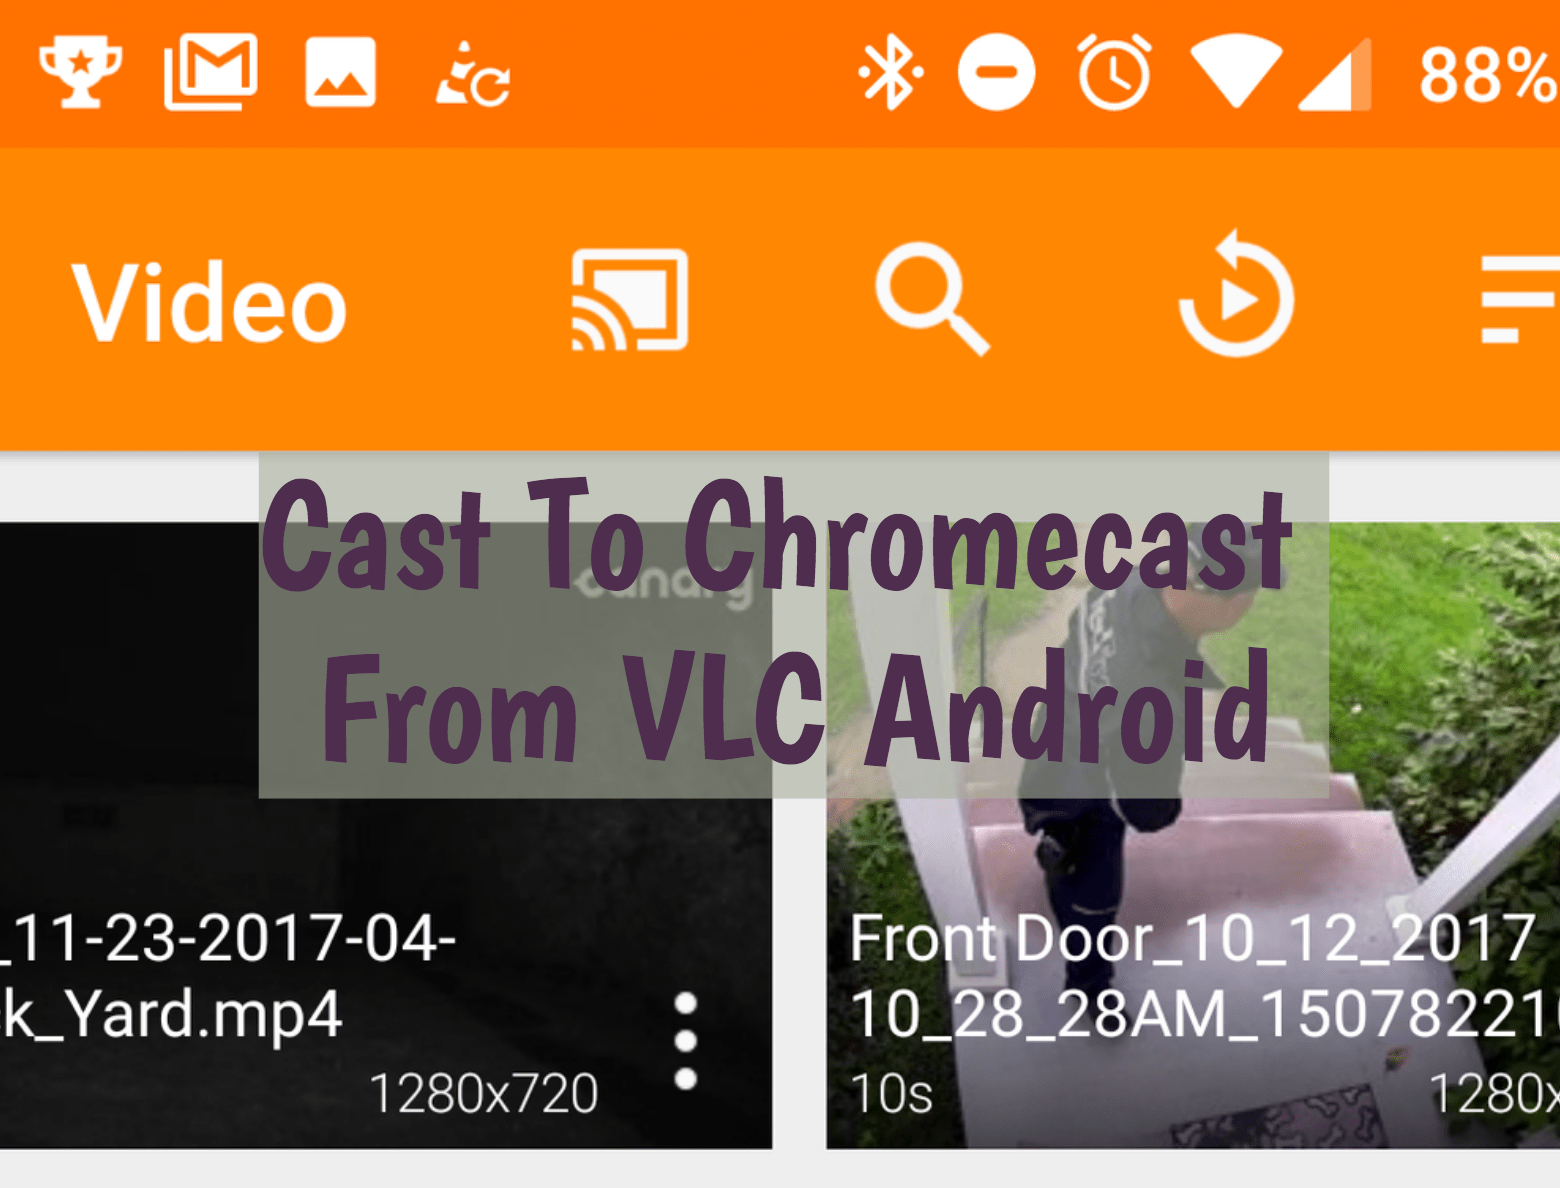 vlc android chromecast